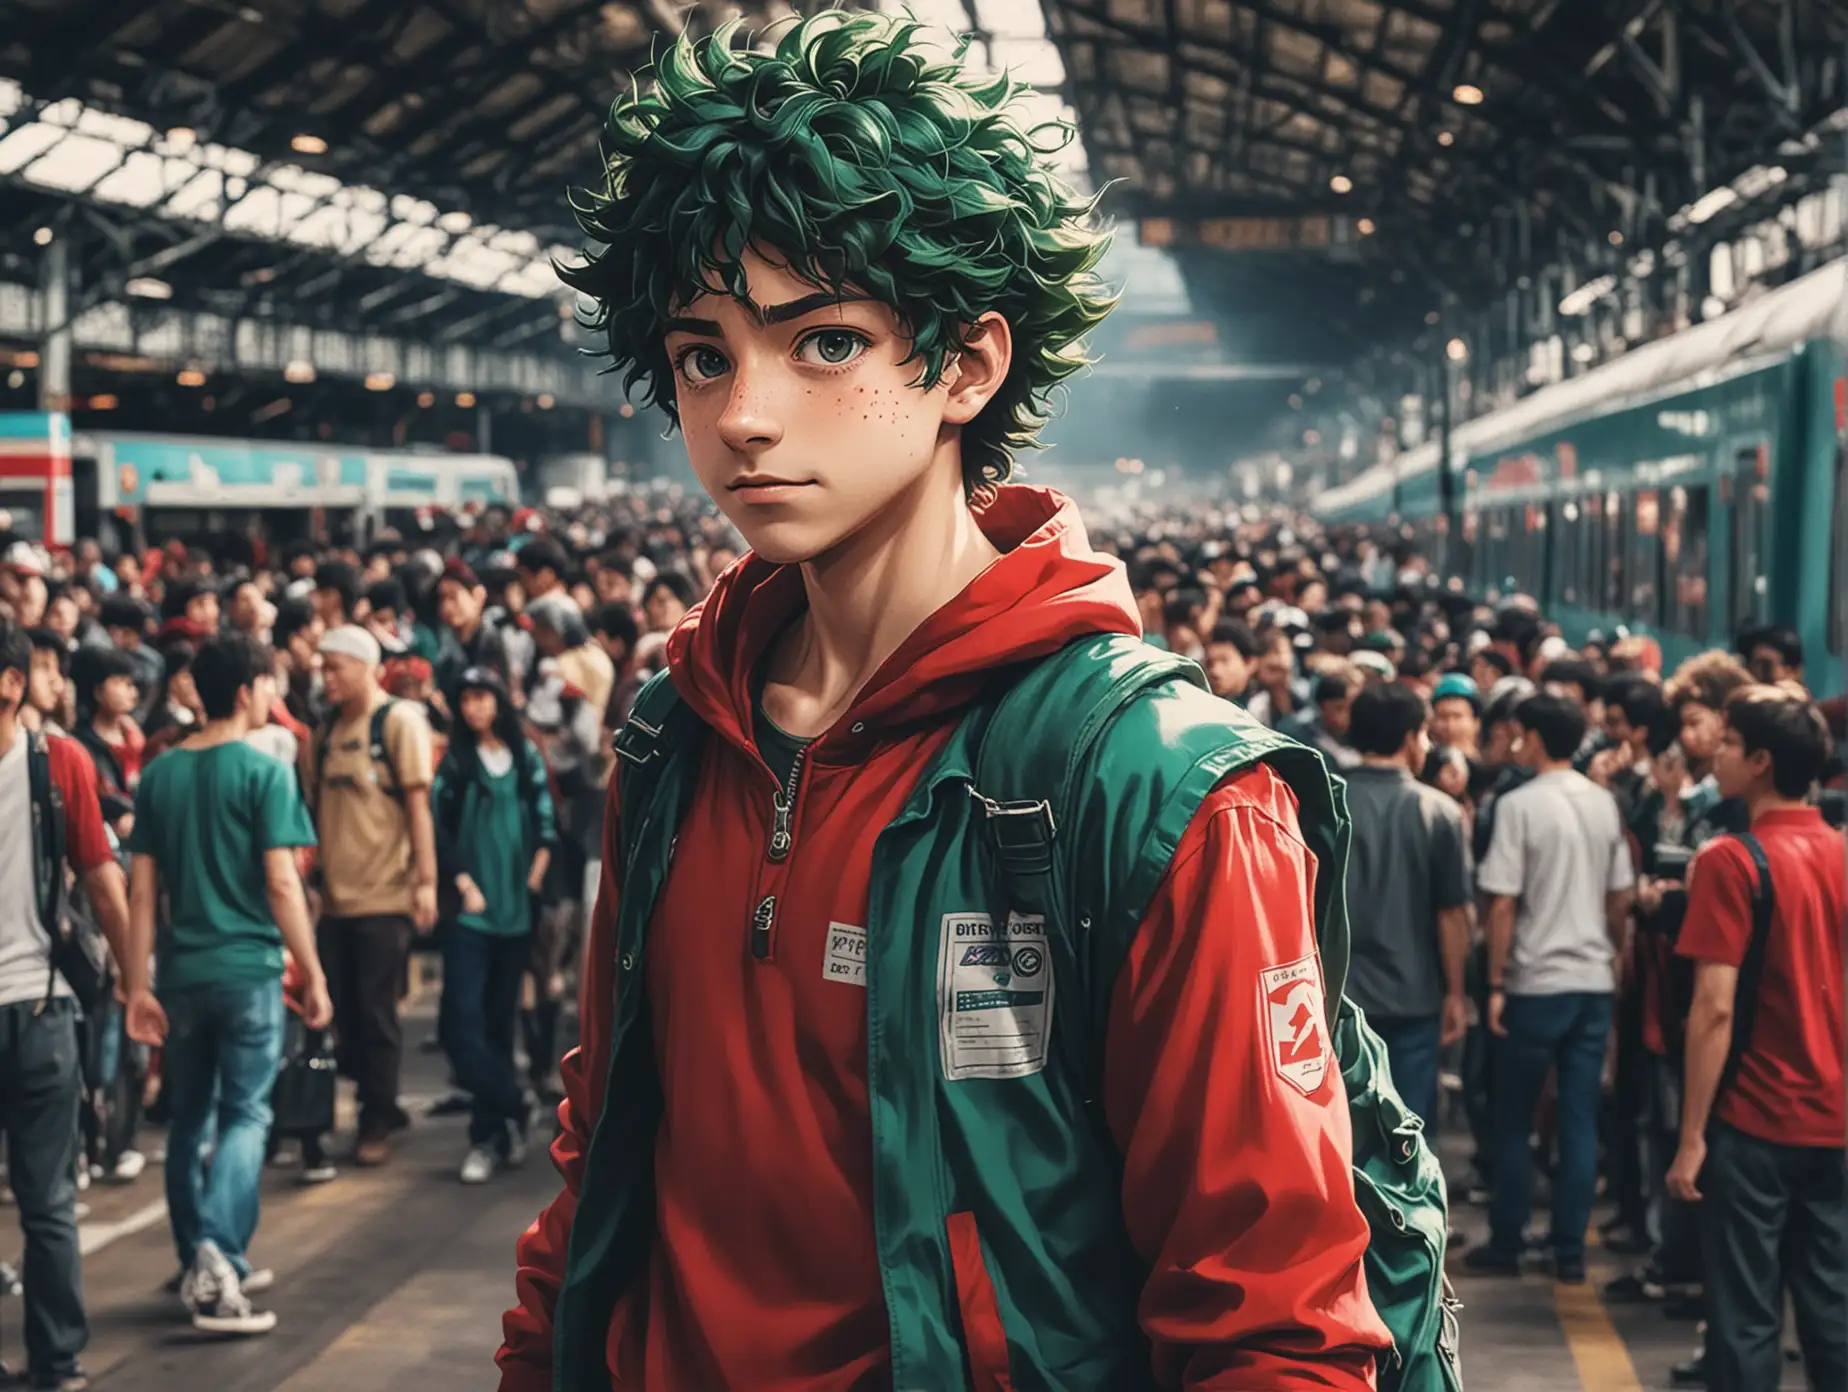 Young-Man-Resembling-Izuku-Midoriya-at-Crowded-Train-Station-in-Anime-Style